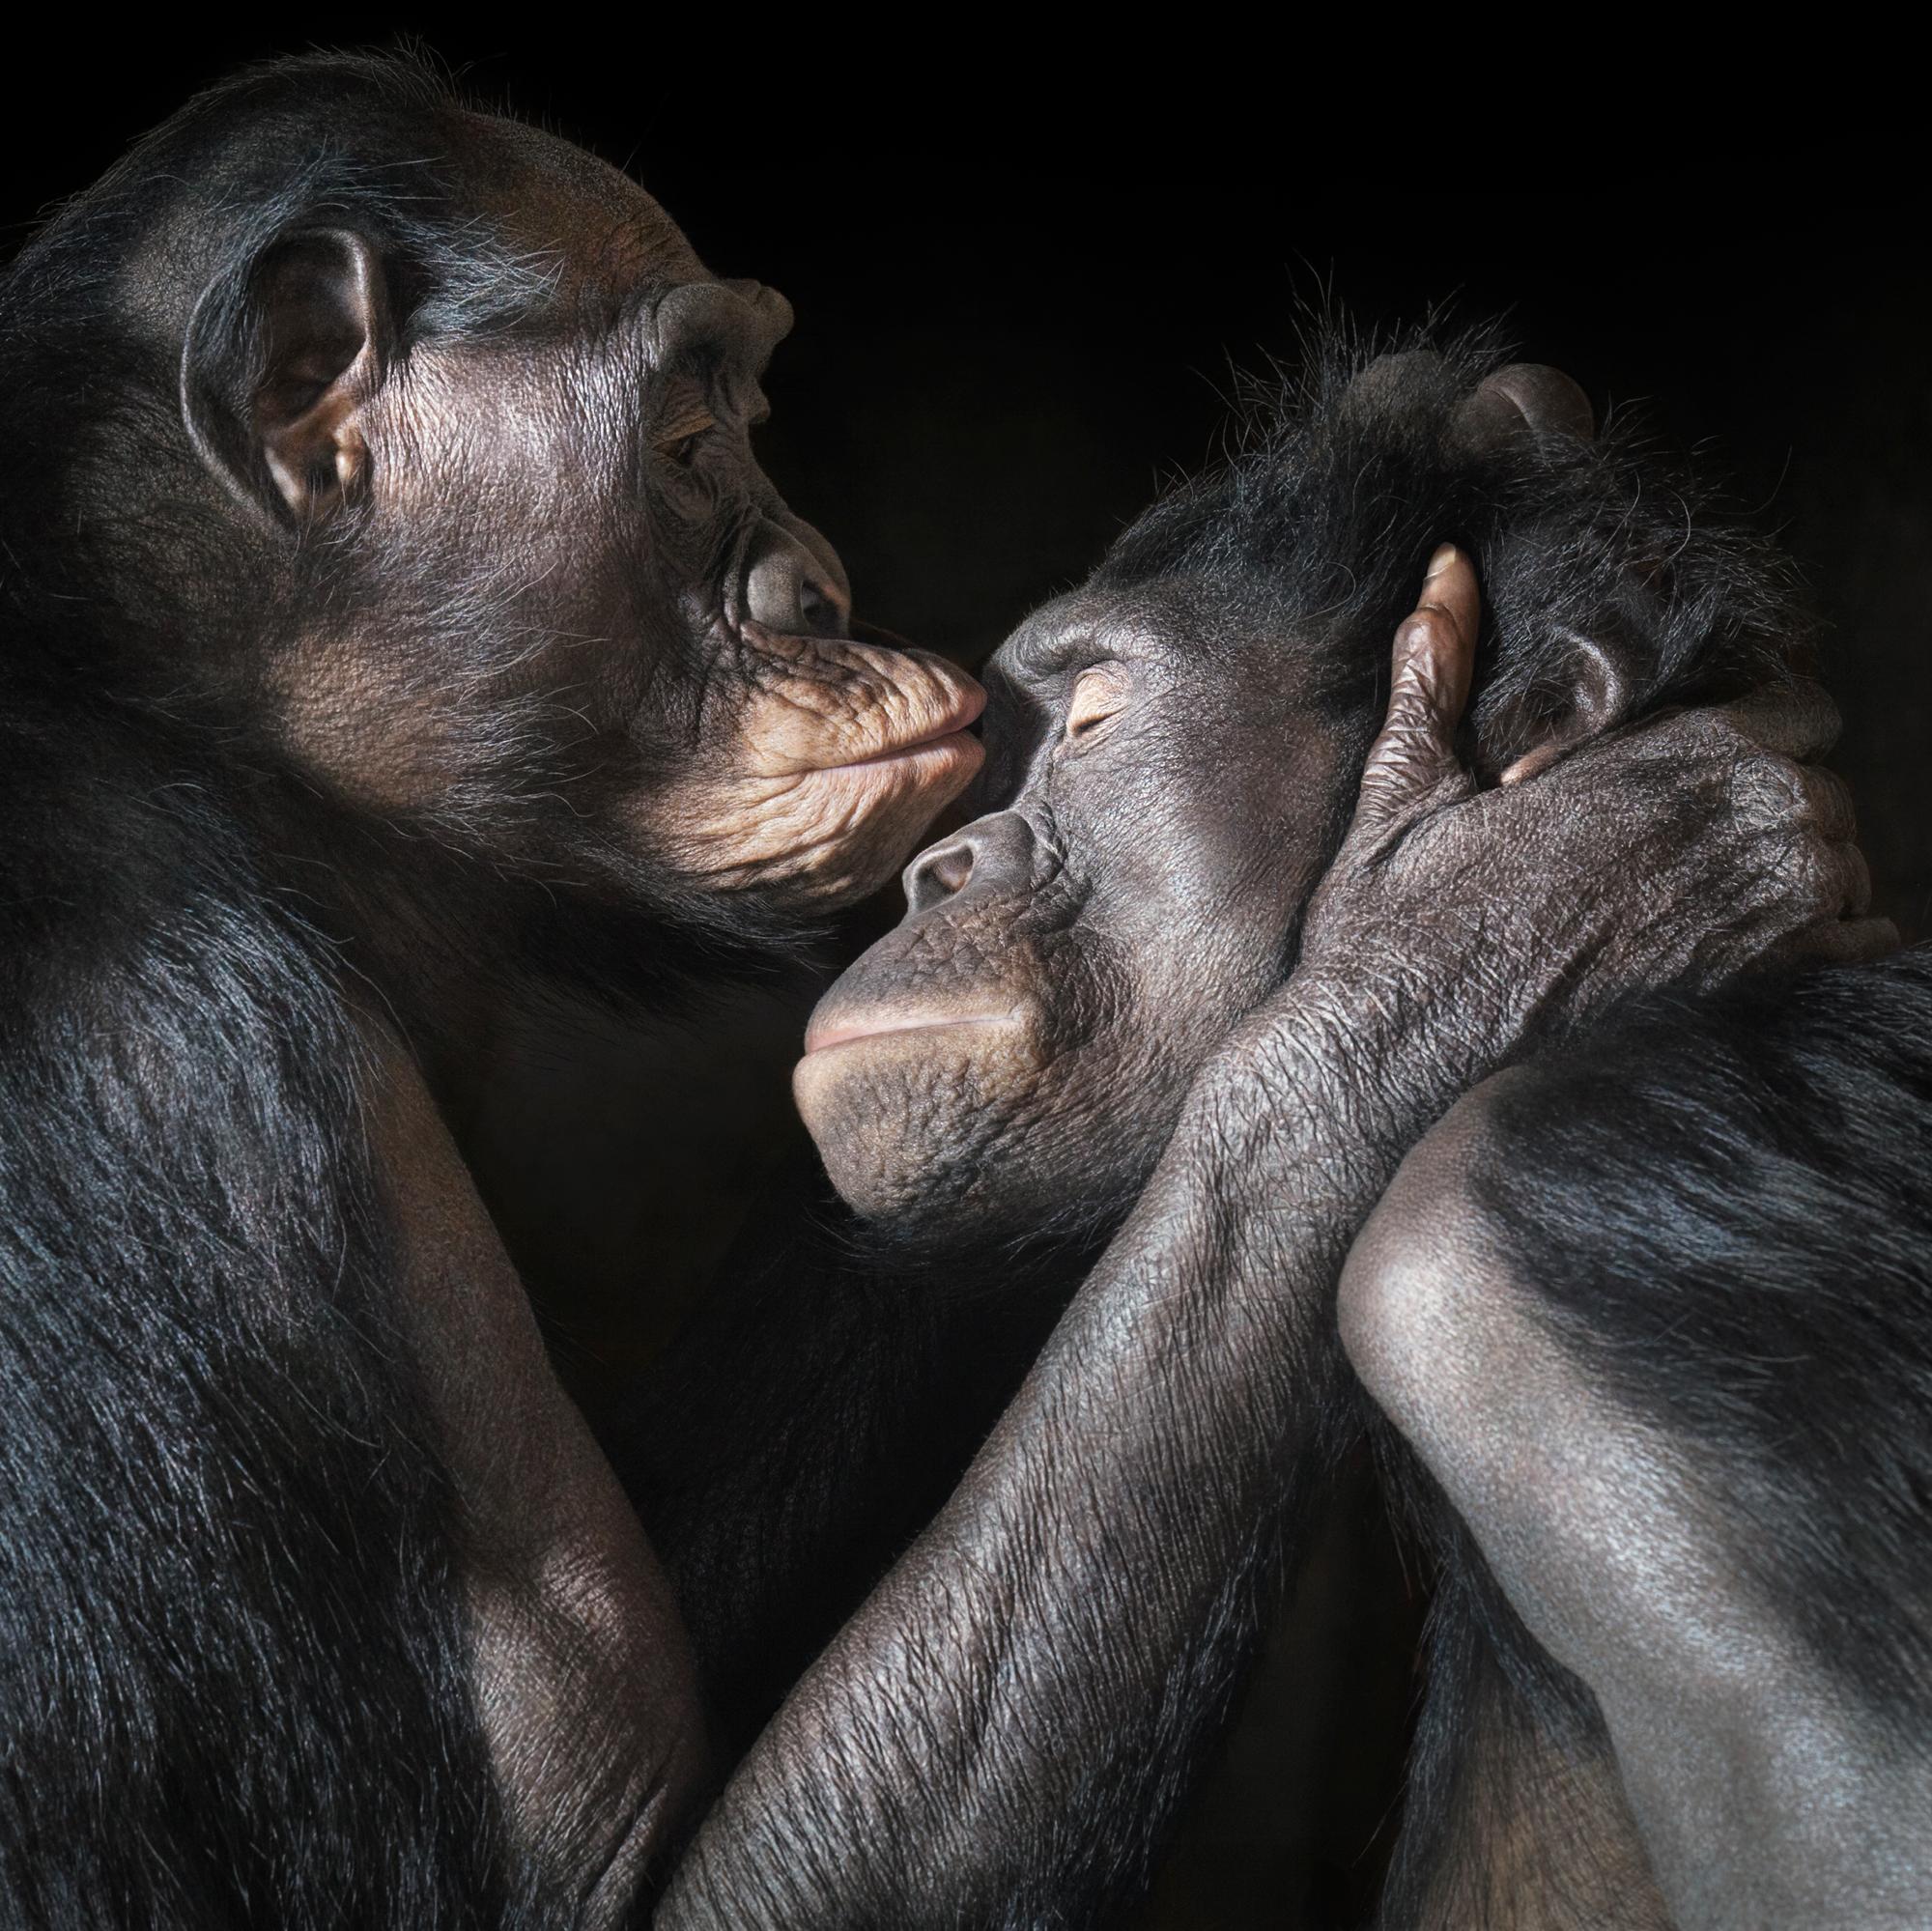 monkeys kissing